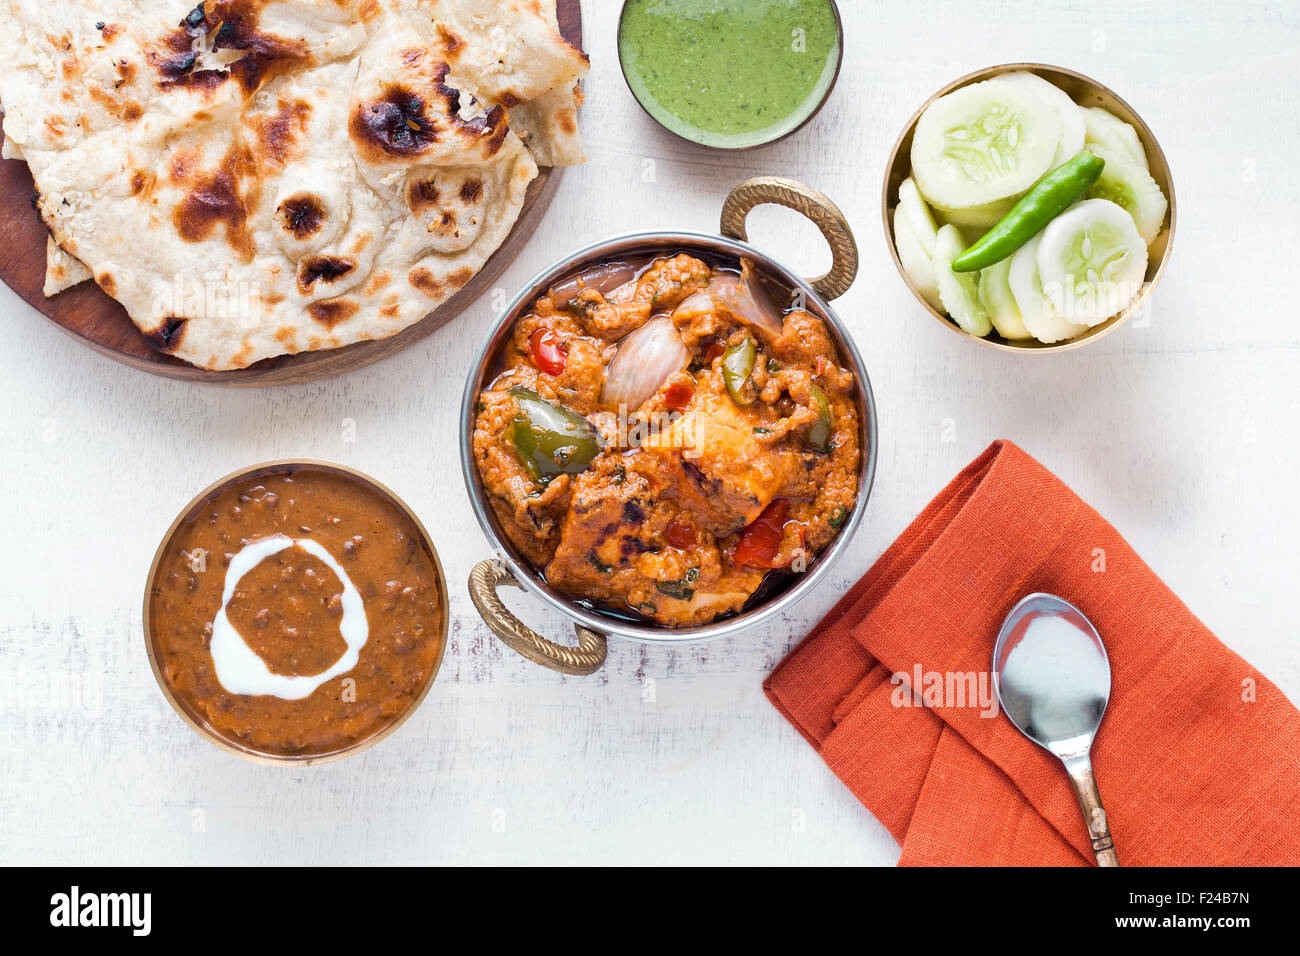 Indian Lunch with Paneer tikka masala, Dal Makhani, Naan, chutney and salad. Stock Photo